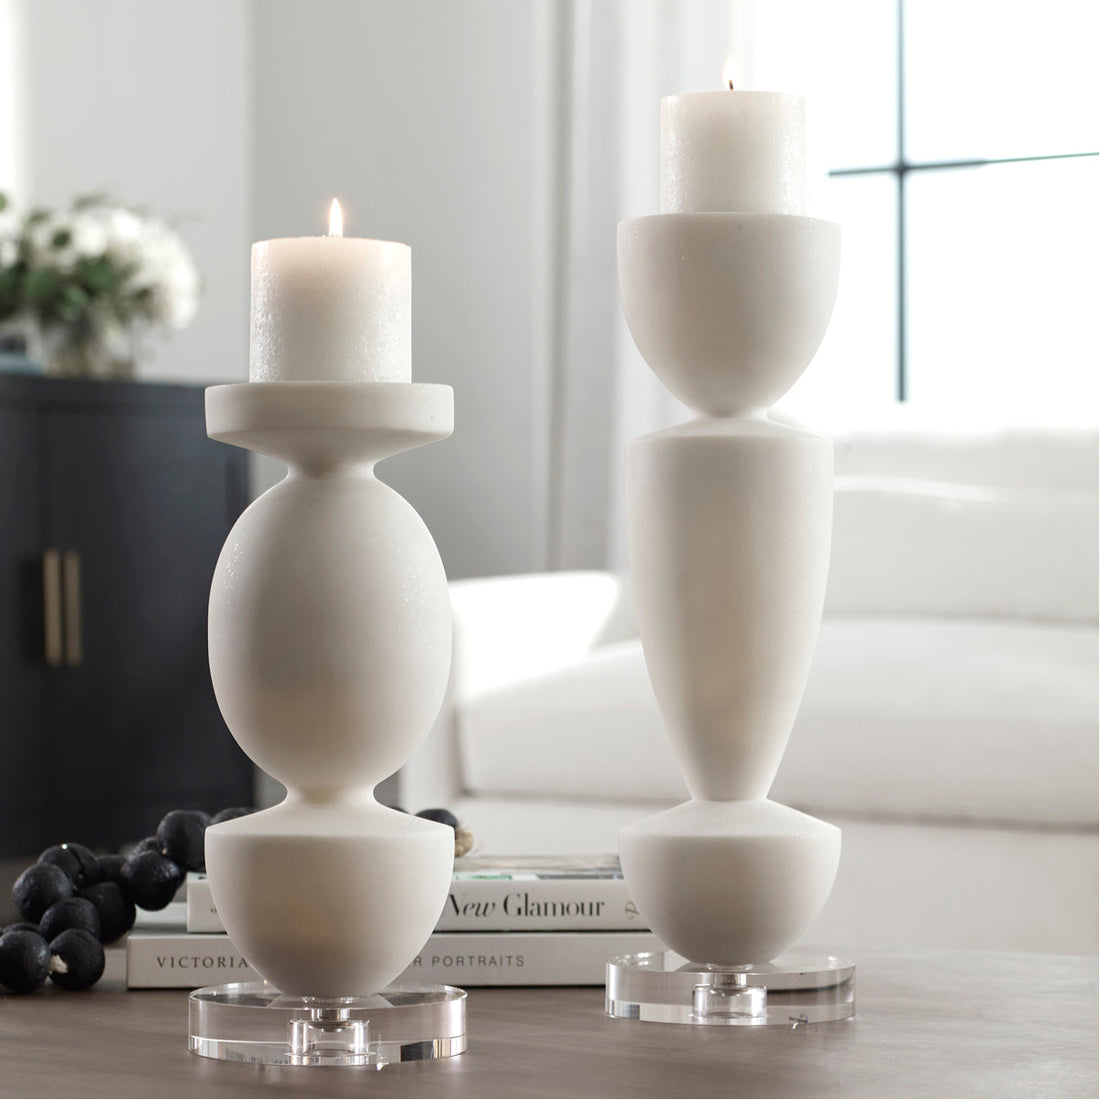 Uttermost Lido White Stone Candleholders, 2-Piece Set